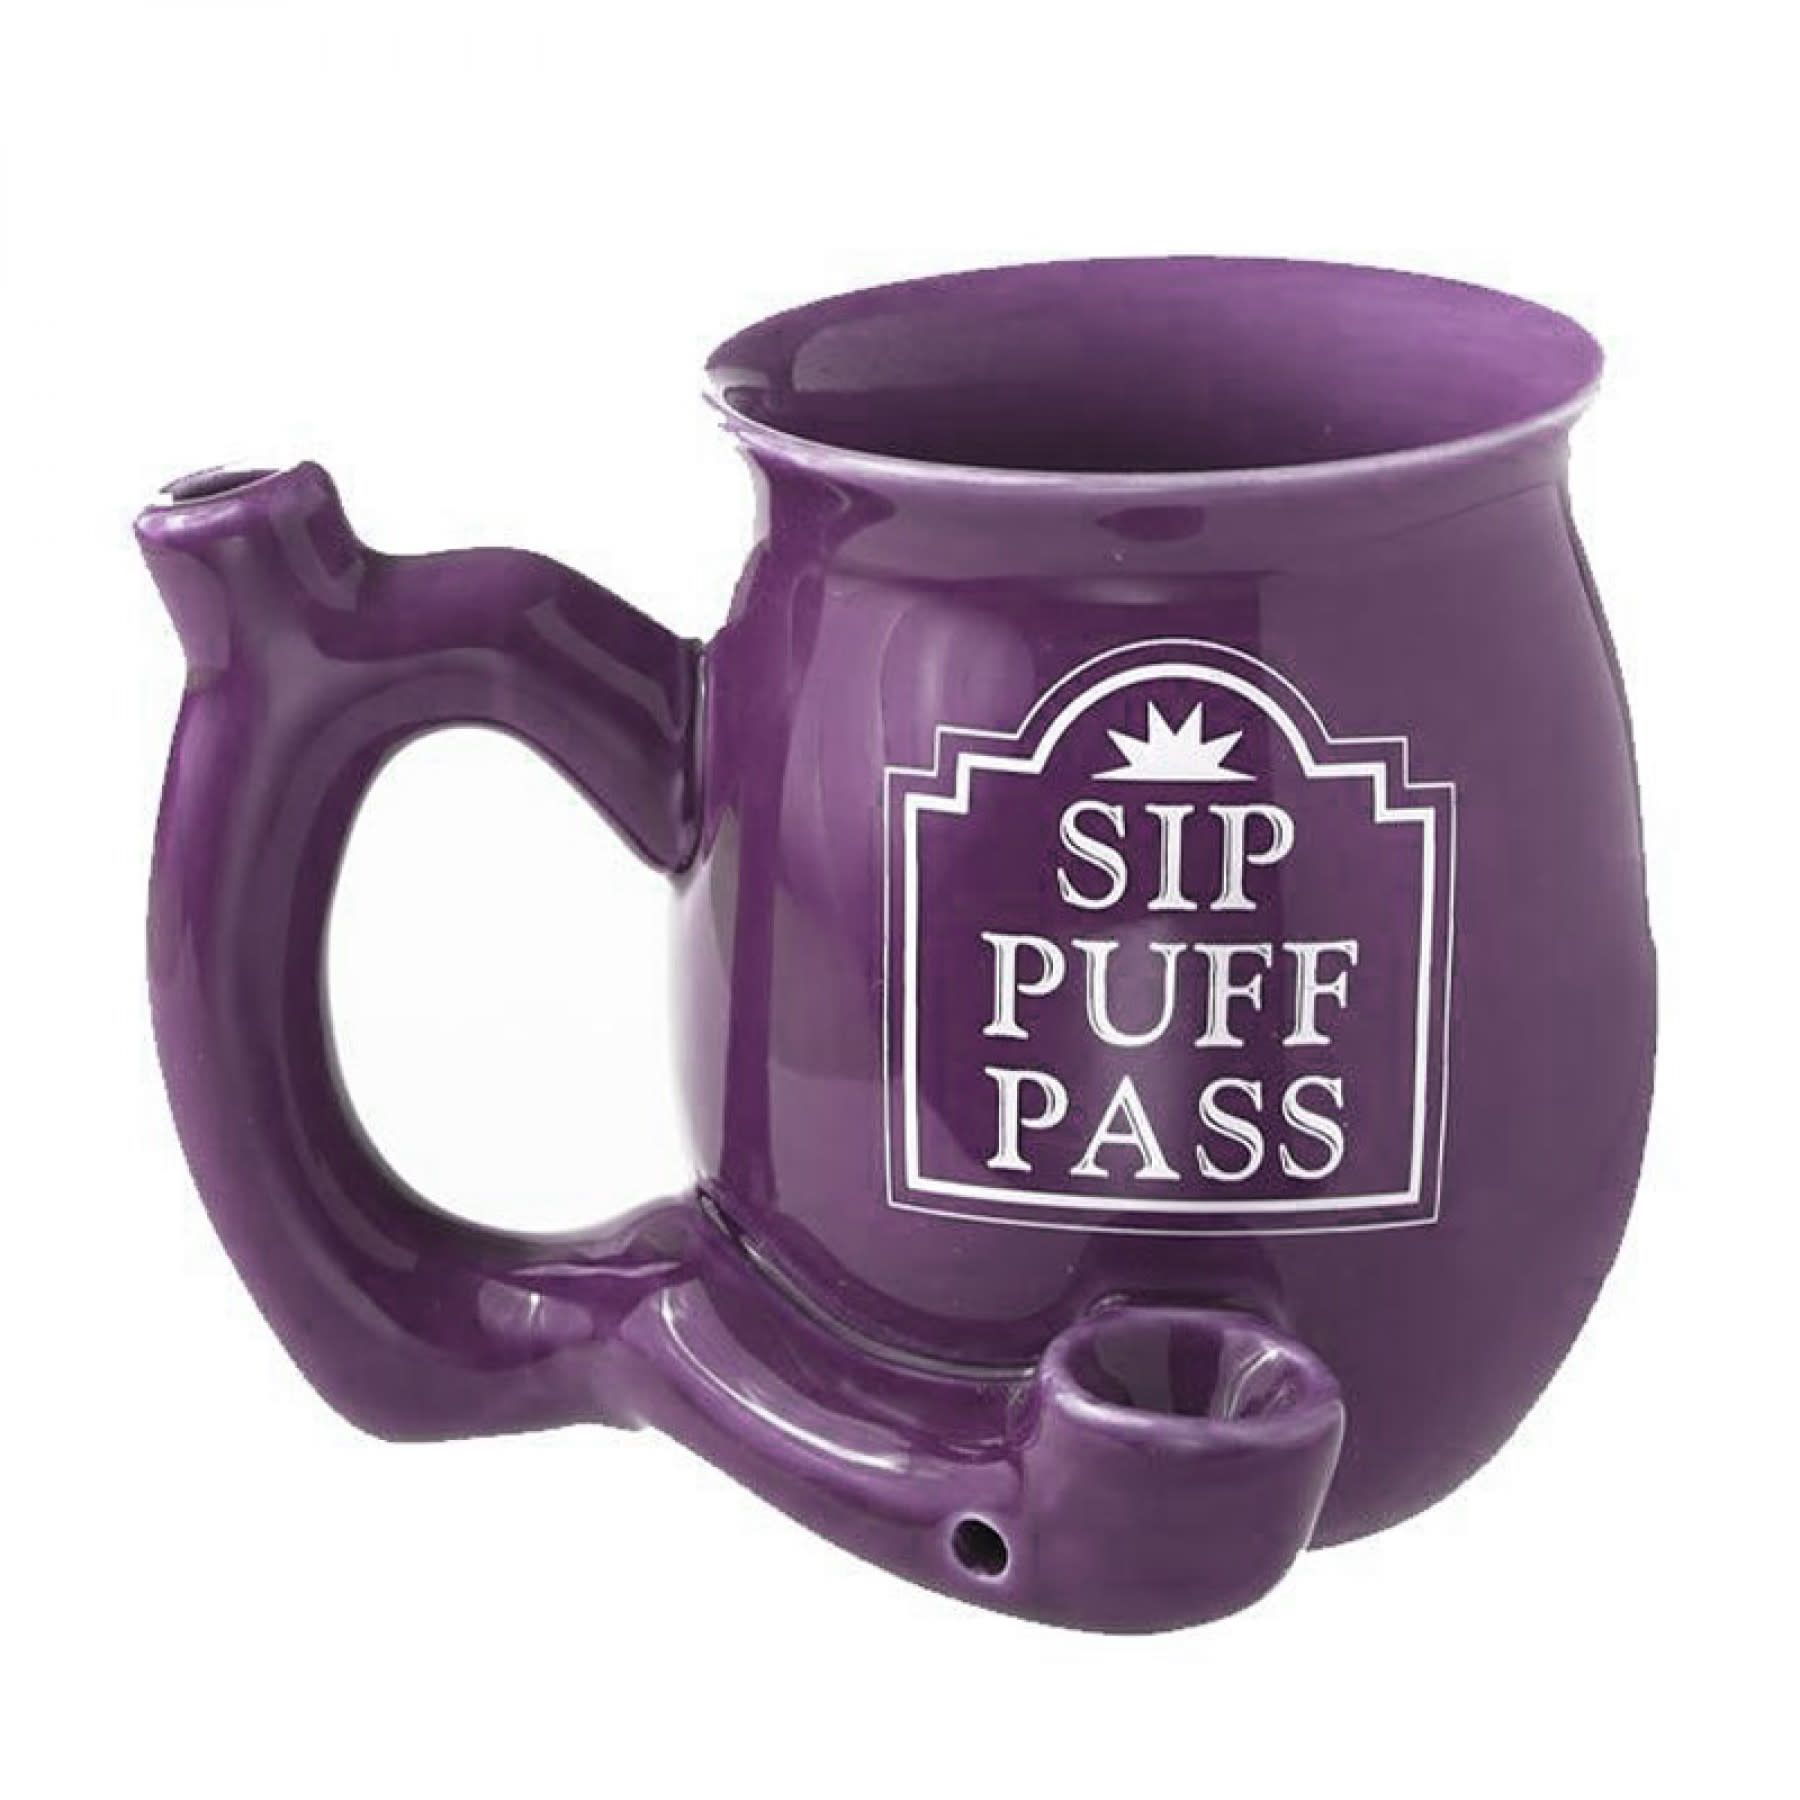 West Coast Gifts Ceramic Sip Puff Pass Mug Pipe - Purple